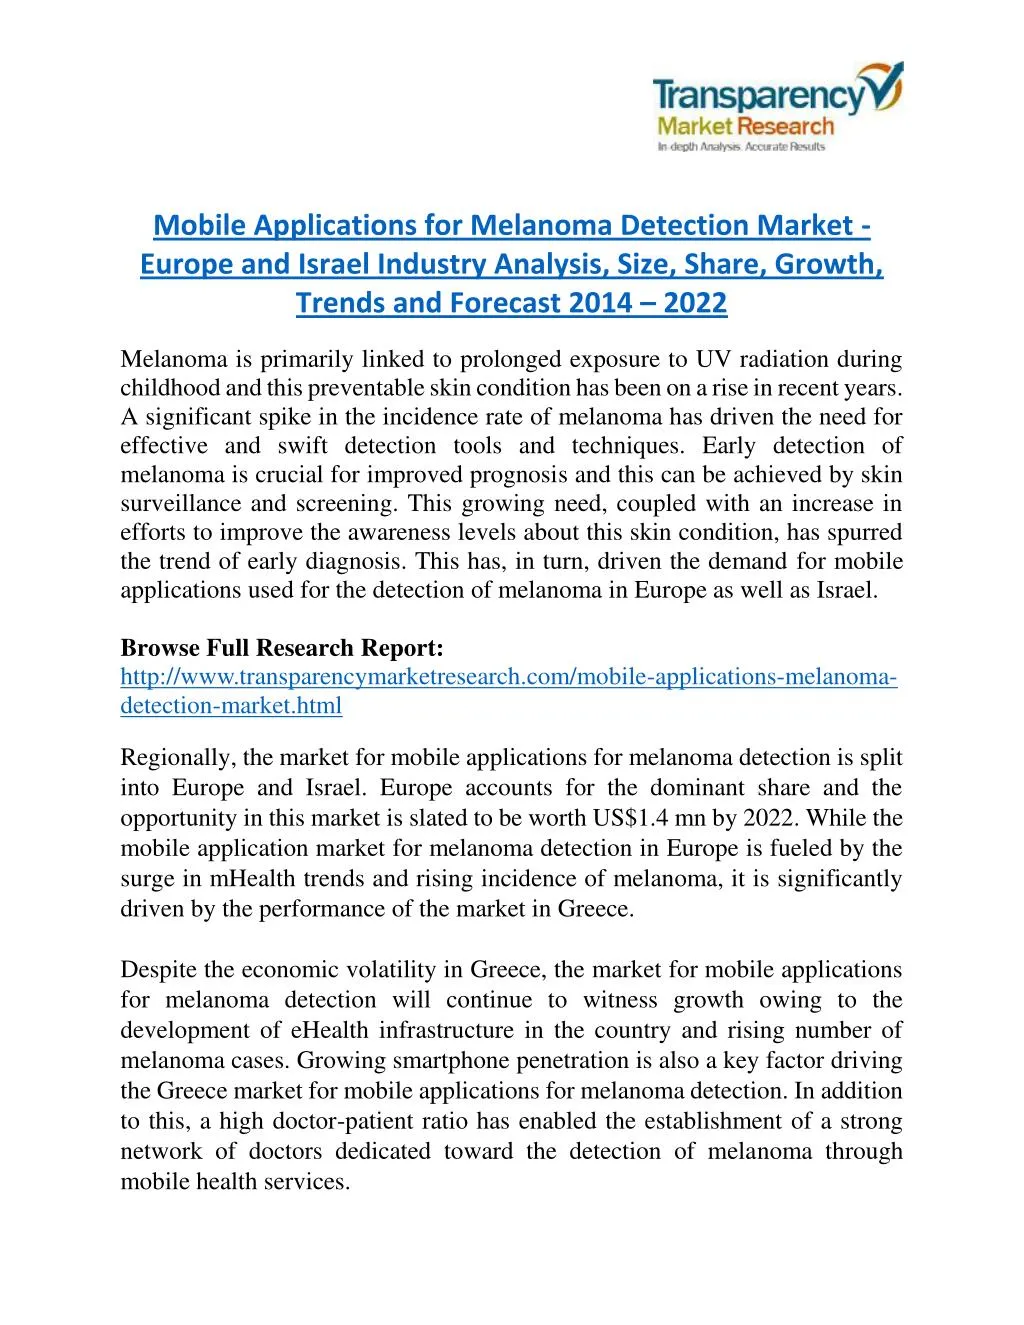 mobile applications for melanoma detection market